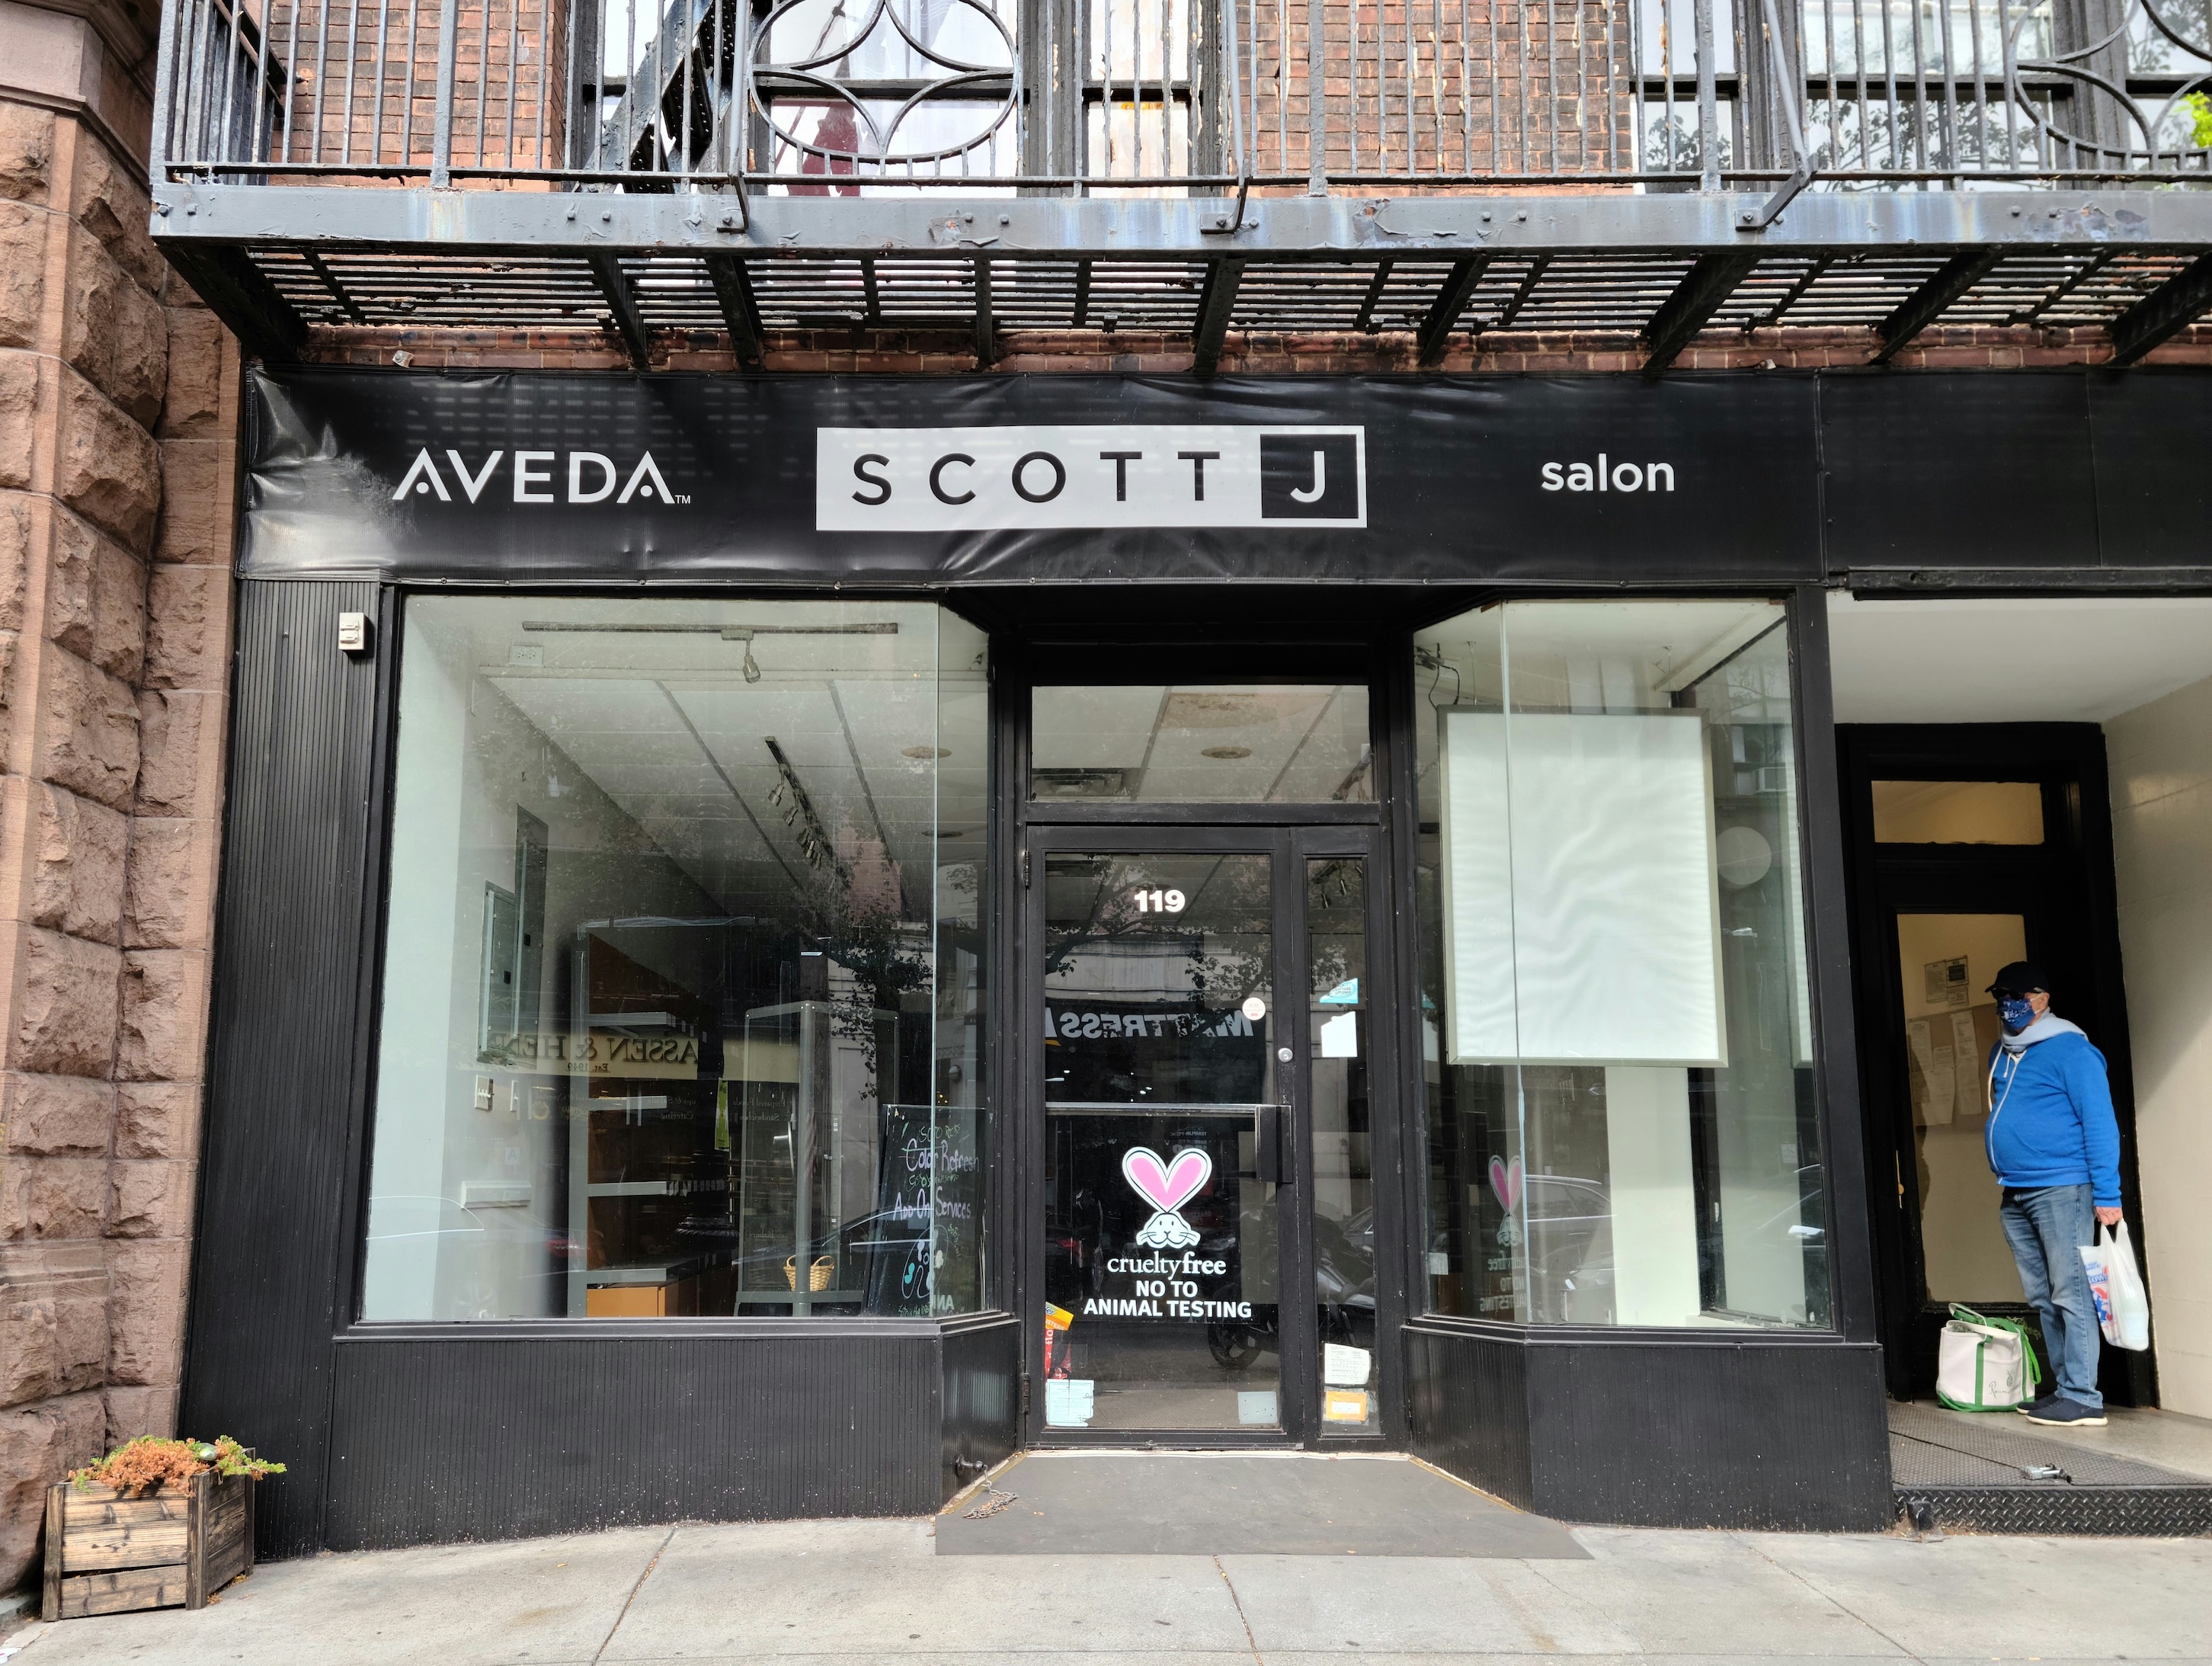 Scott J Aveda Salon (119 Montague St.)